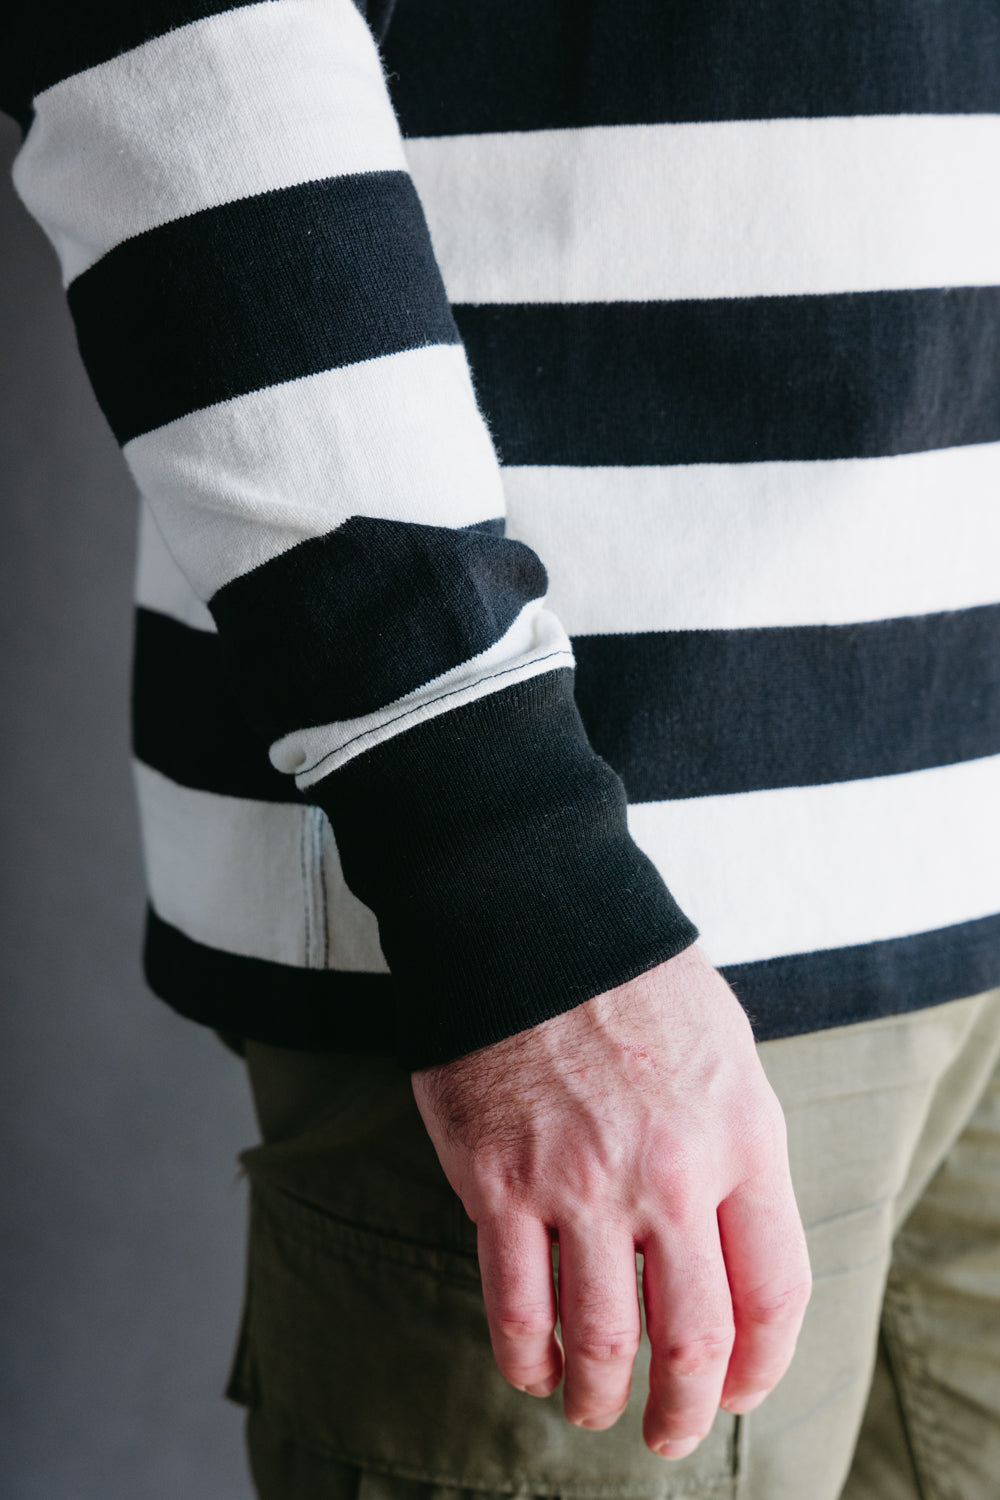 IHTB-01-BLK-WHT - 11oz Cotton Knit Long-Sleeved Sweater - Black, White